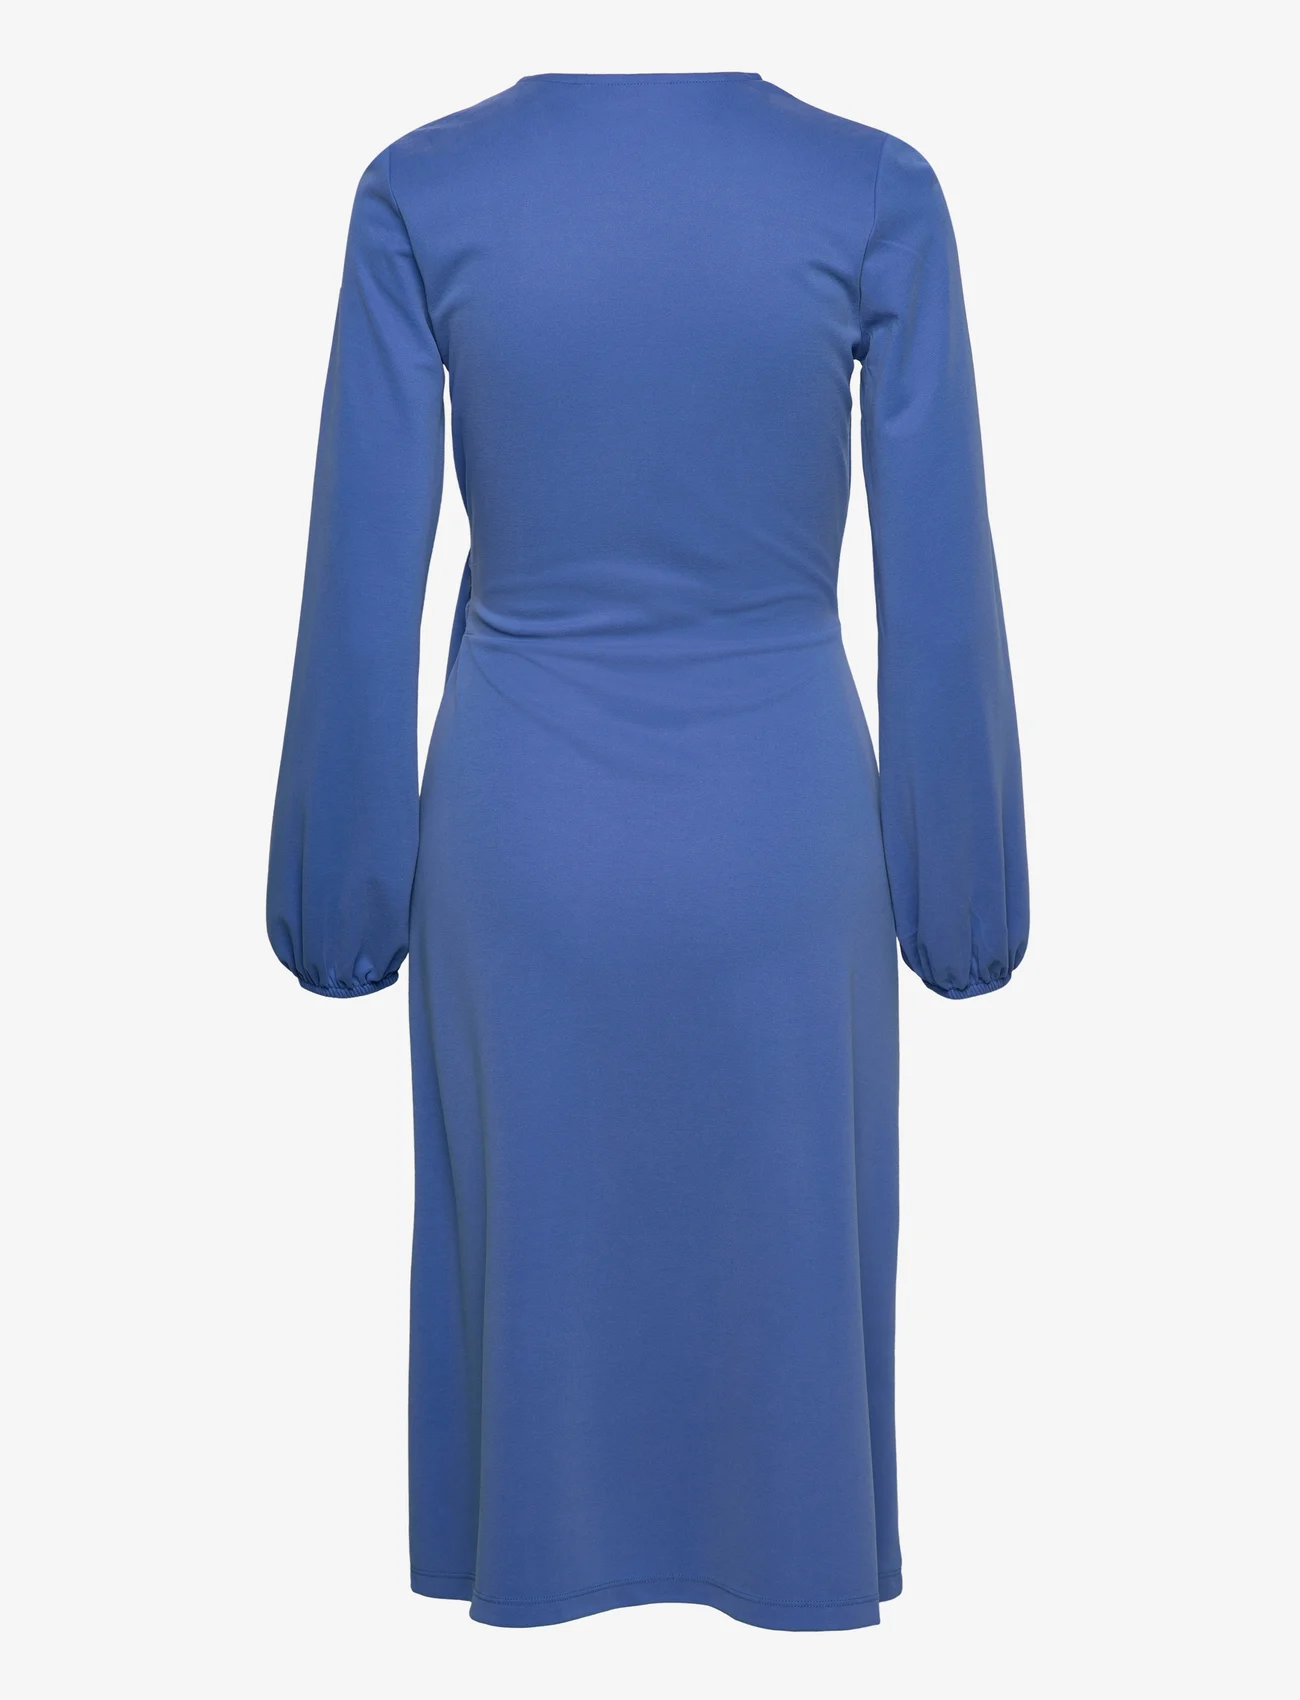 InWear - CatjaIW Wrap Dress - sukienki kopertowe - fall blue - 1